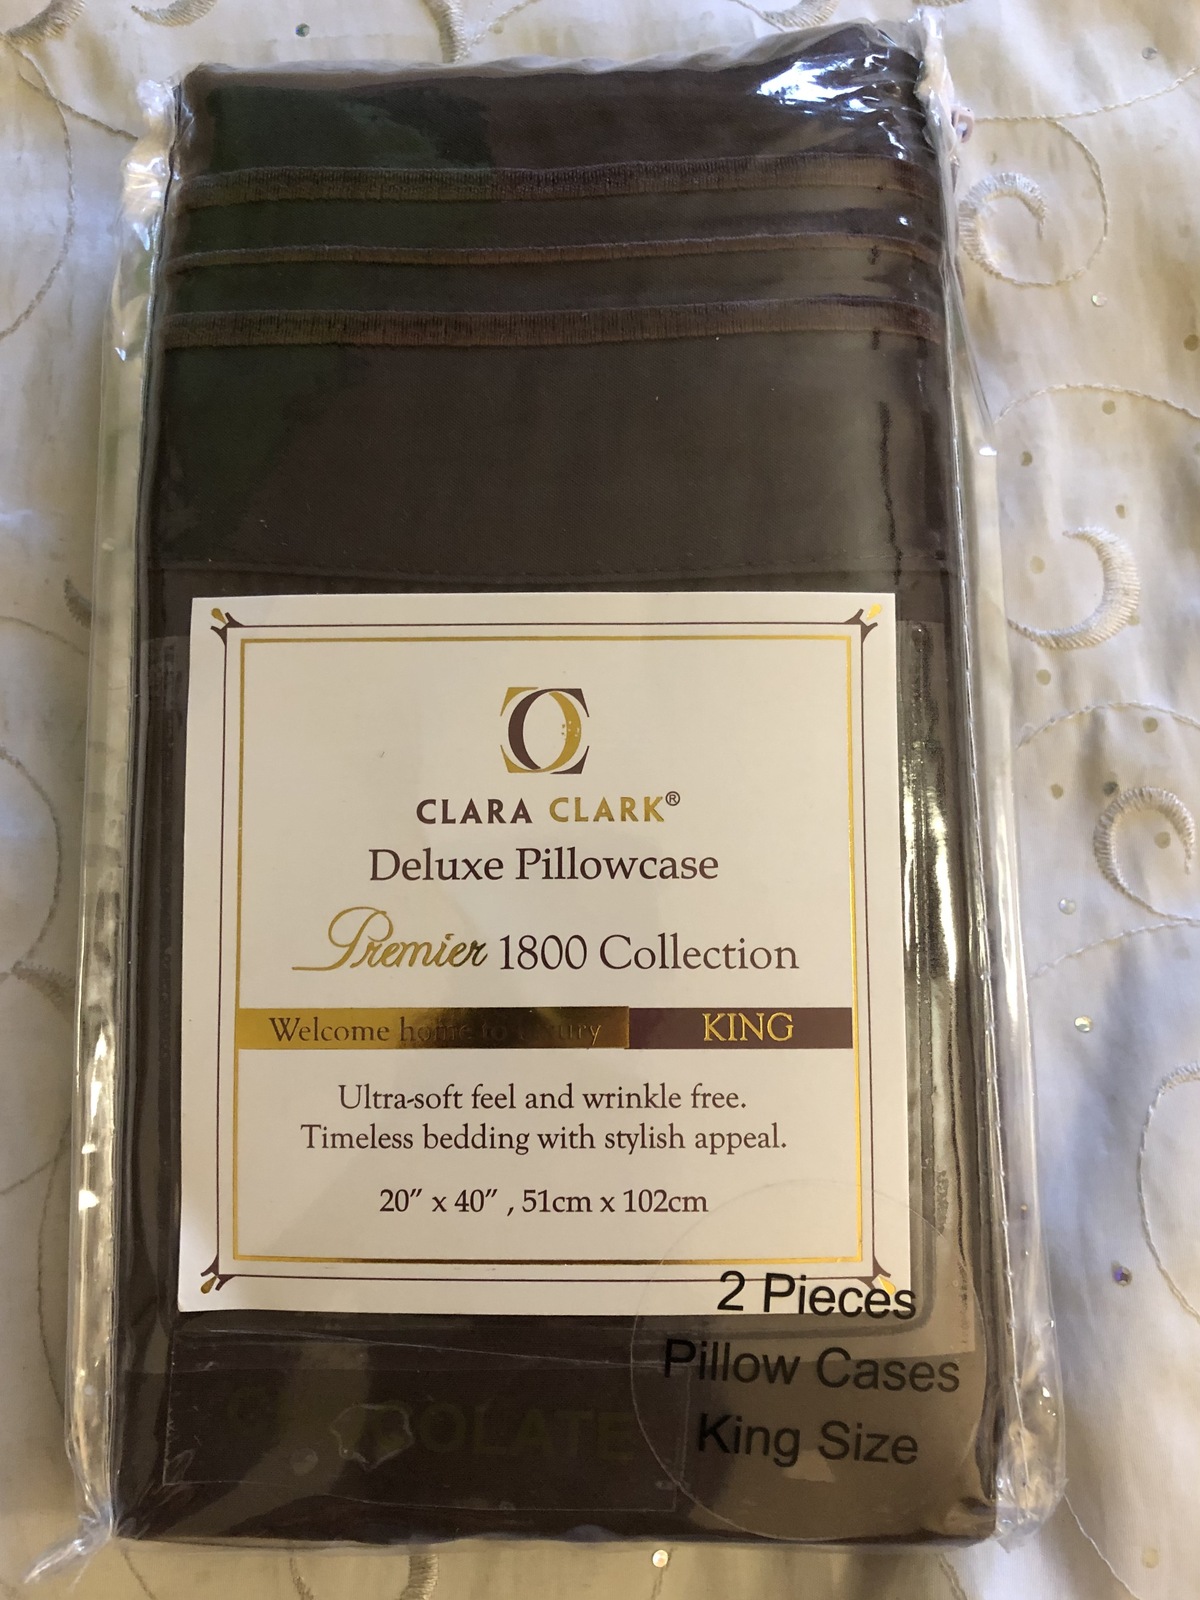 Clara Clark Premier 1800 Collection Pillowcases, King, Brown - $16.95